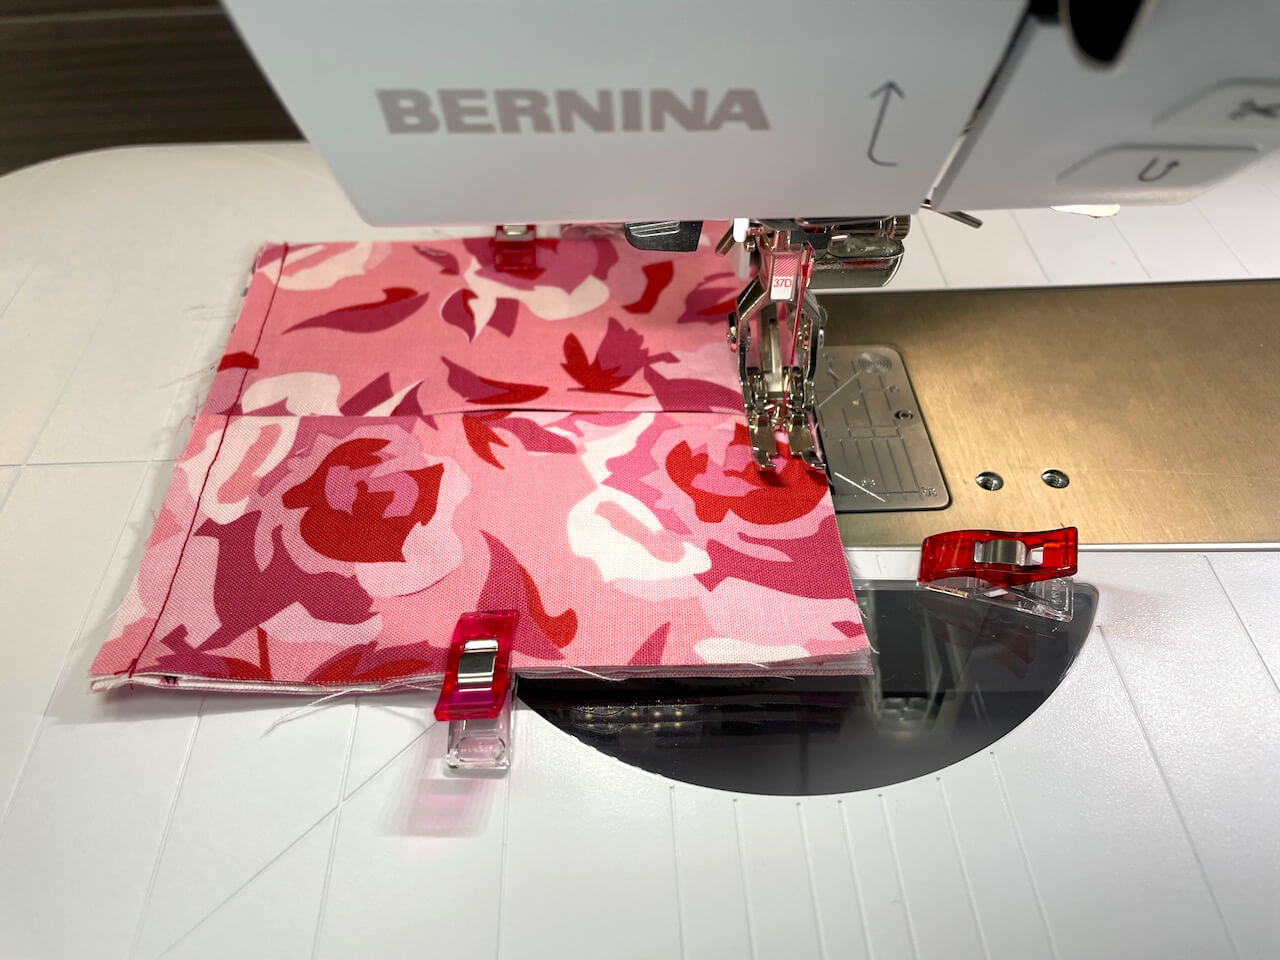 Valentine Applique Coaster Sewing Tutorial & FREE! Applique Printable